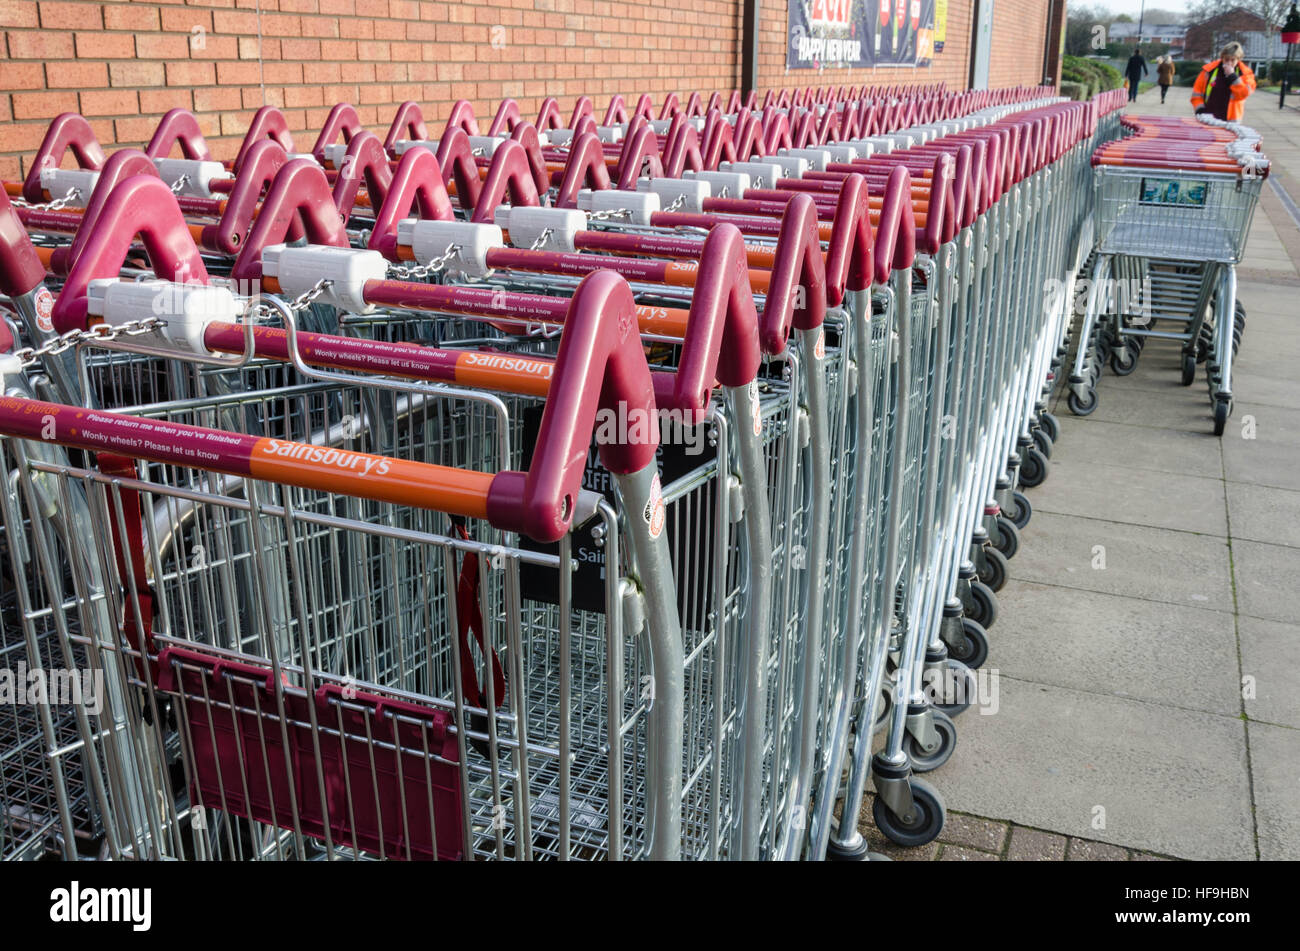 Sainsbury's carrelli per supermercati. Foto Stock